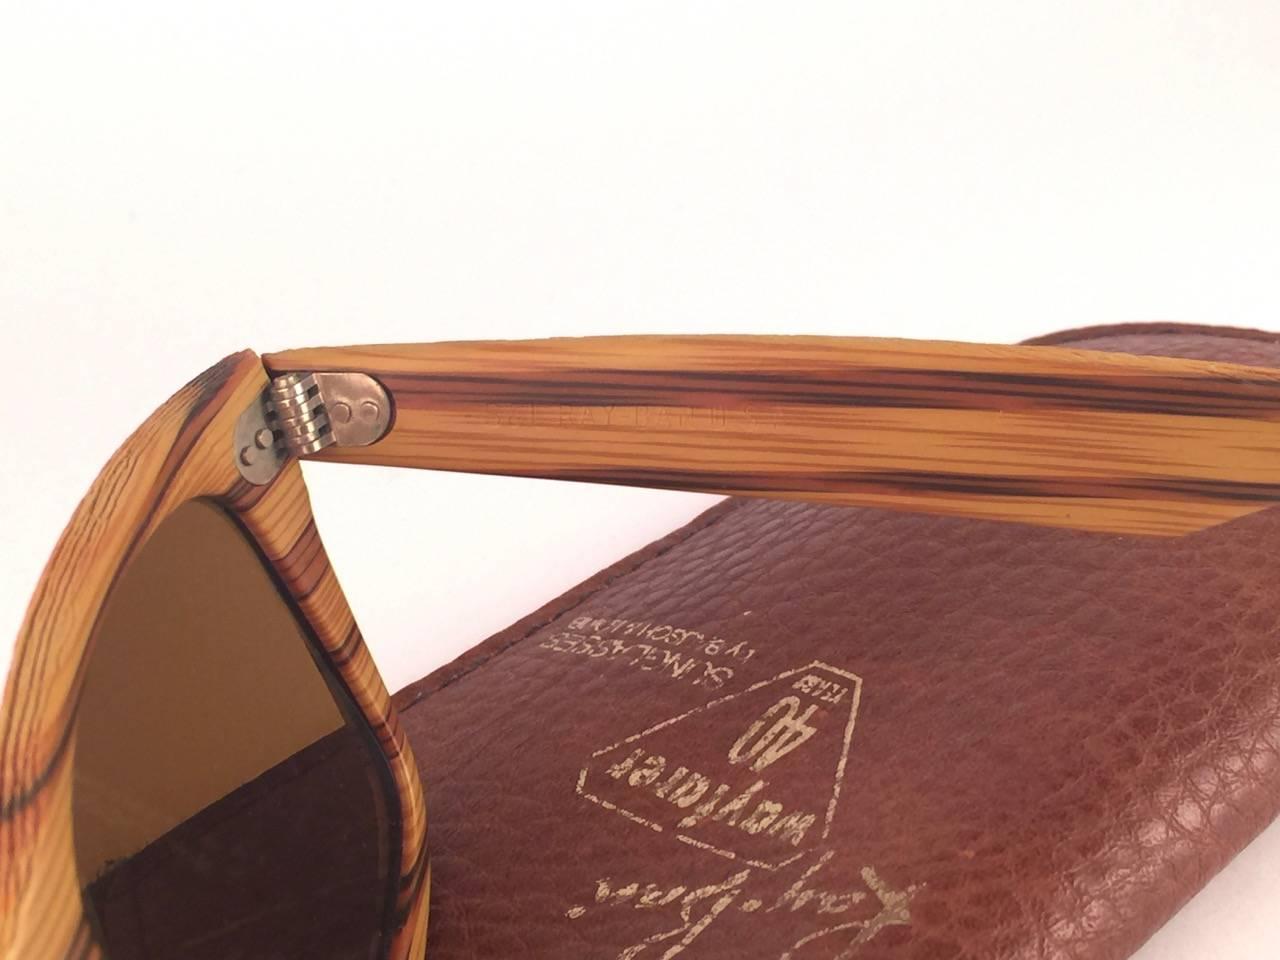  Nouveau Ray Ban The Wayfarer Woodies Teak Edition Collectors USA 80's Sunglasses Unisexe 